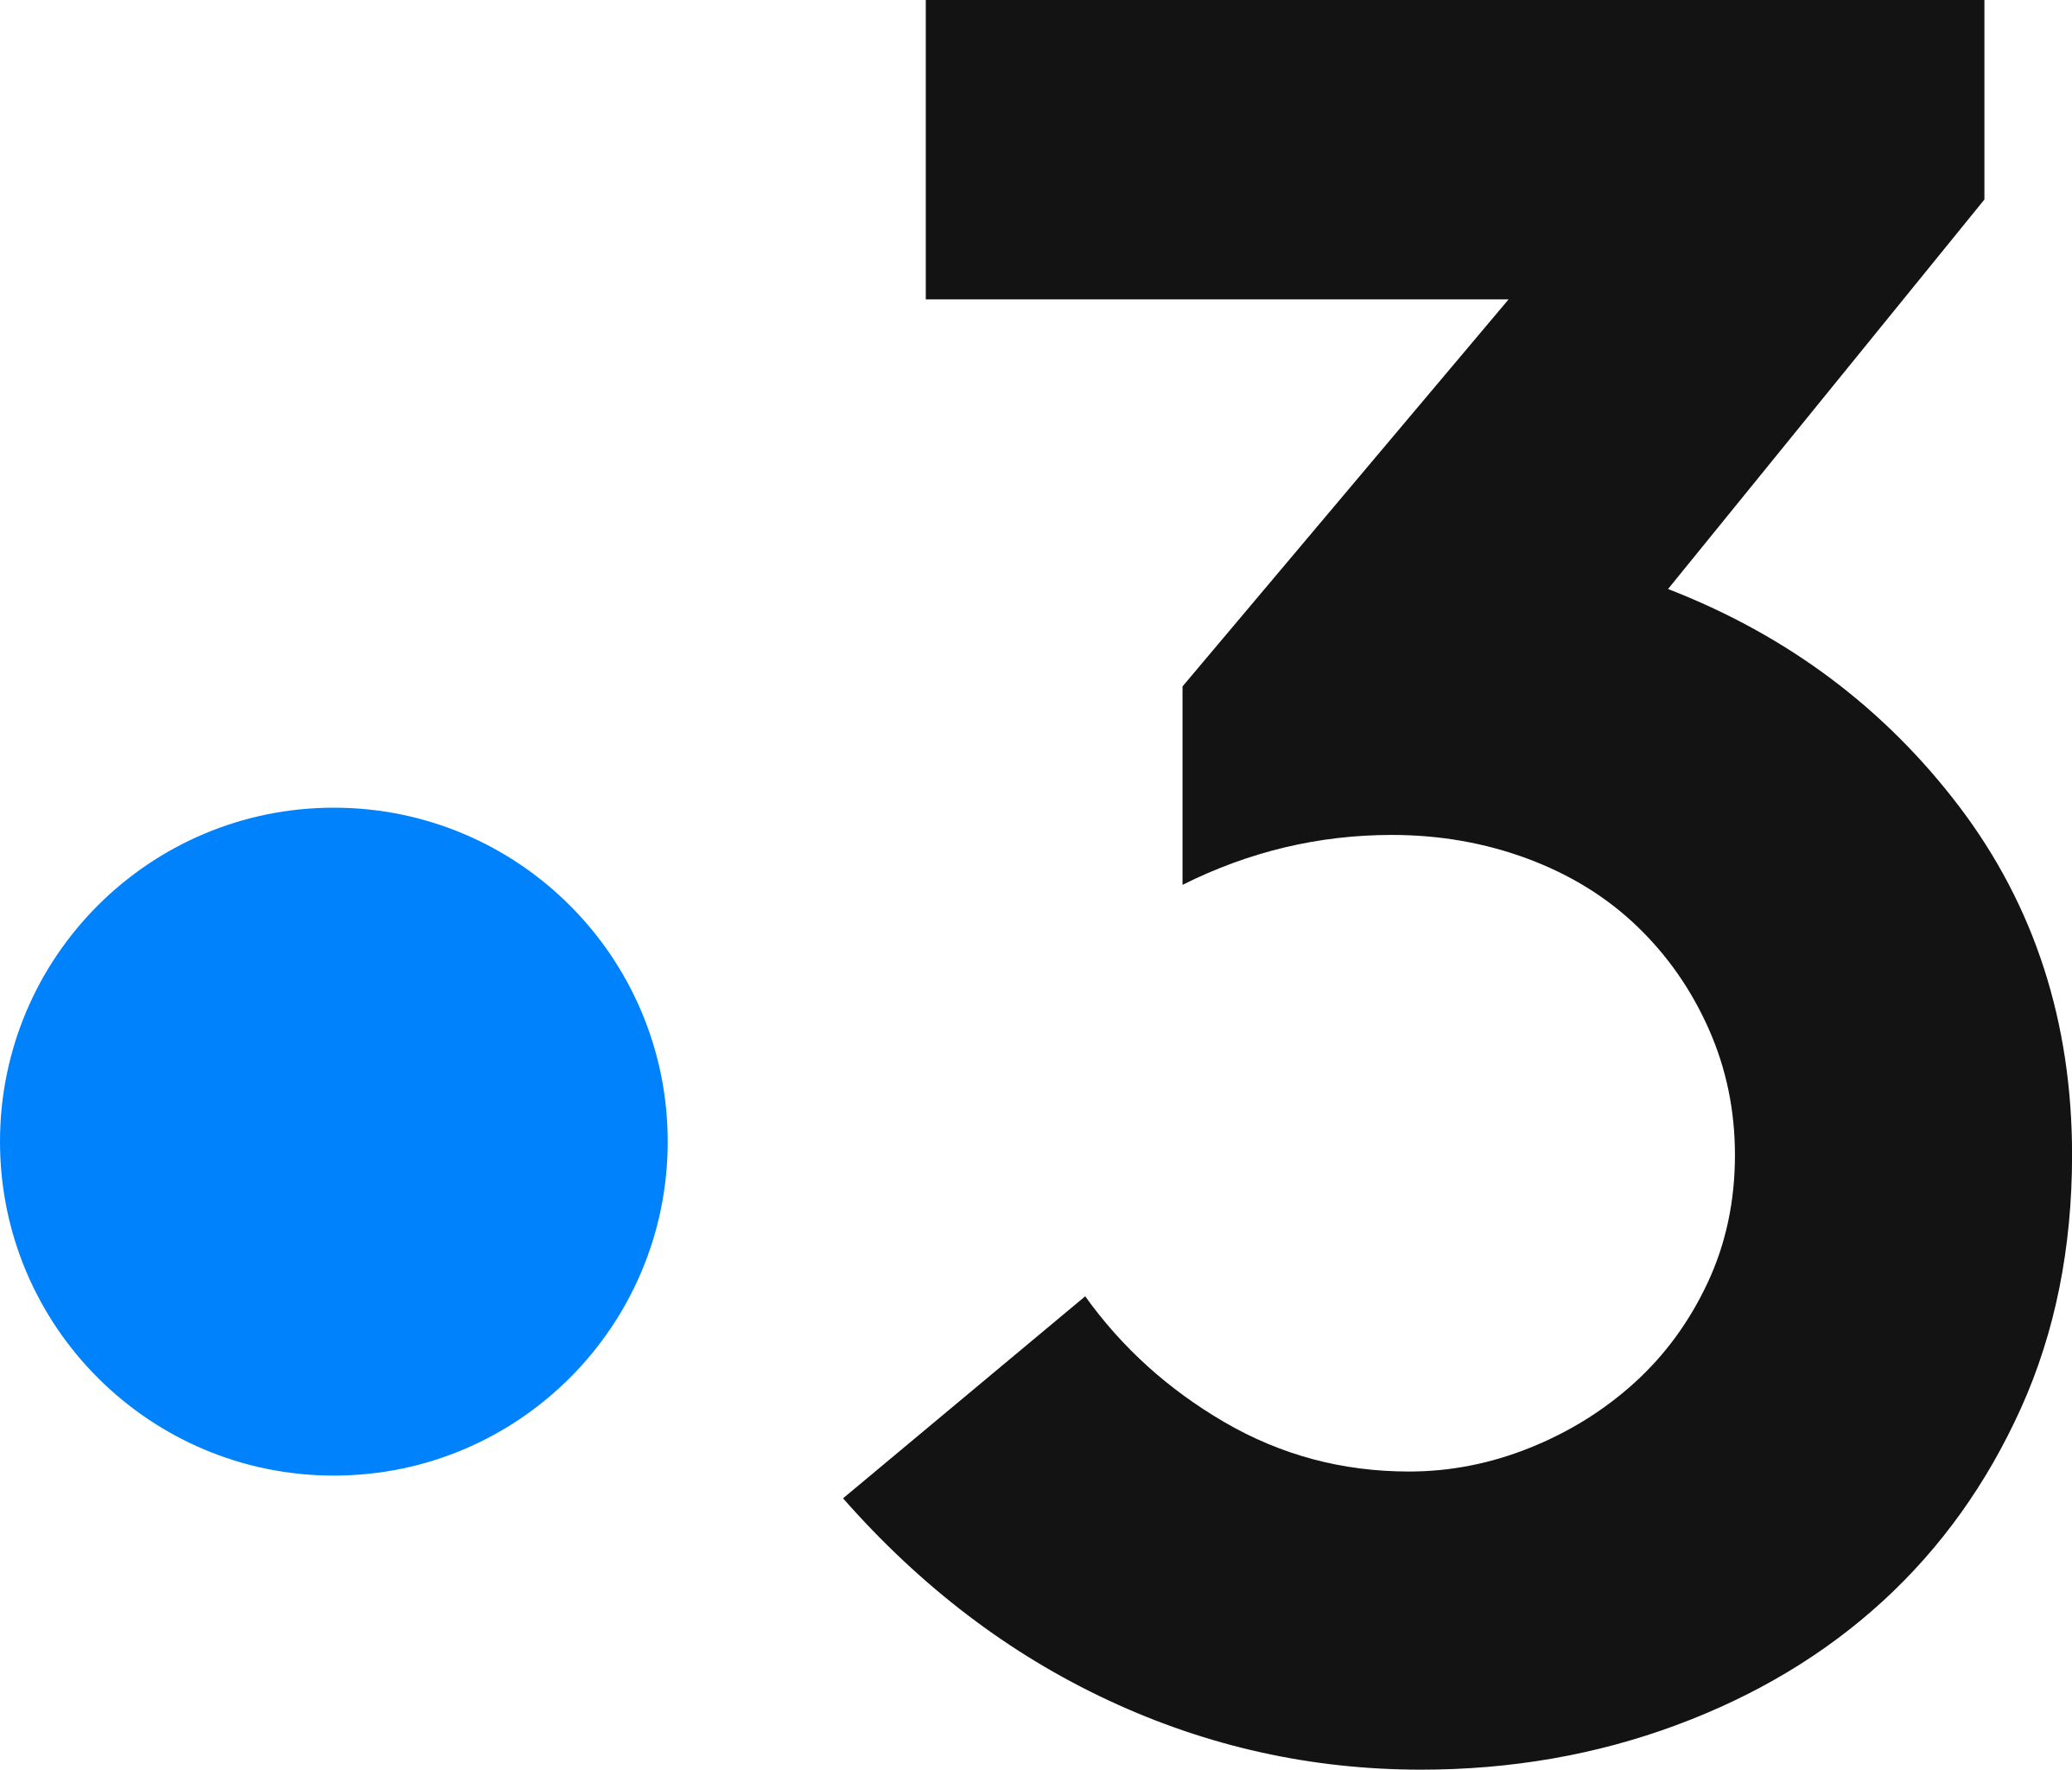 20-minutes-logo